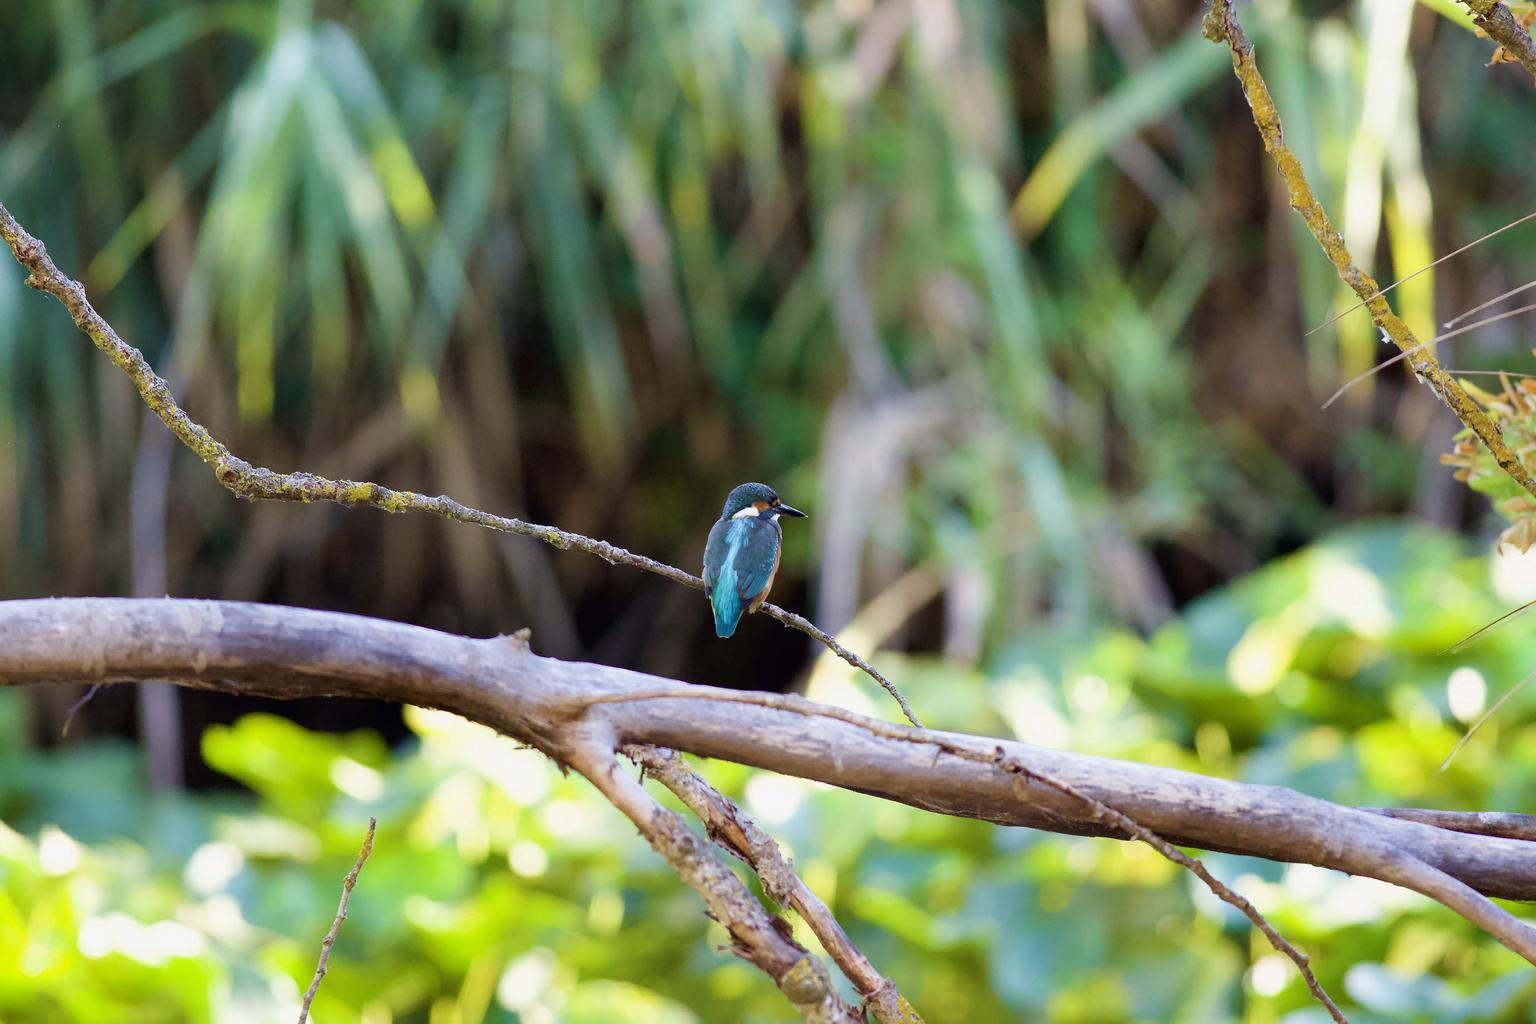 Kingfisher, slightly suspicious of camera clicking...